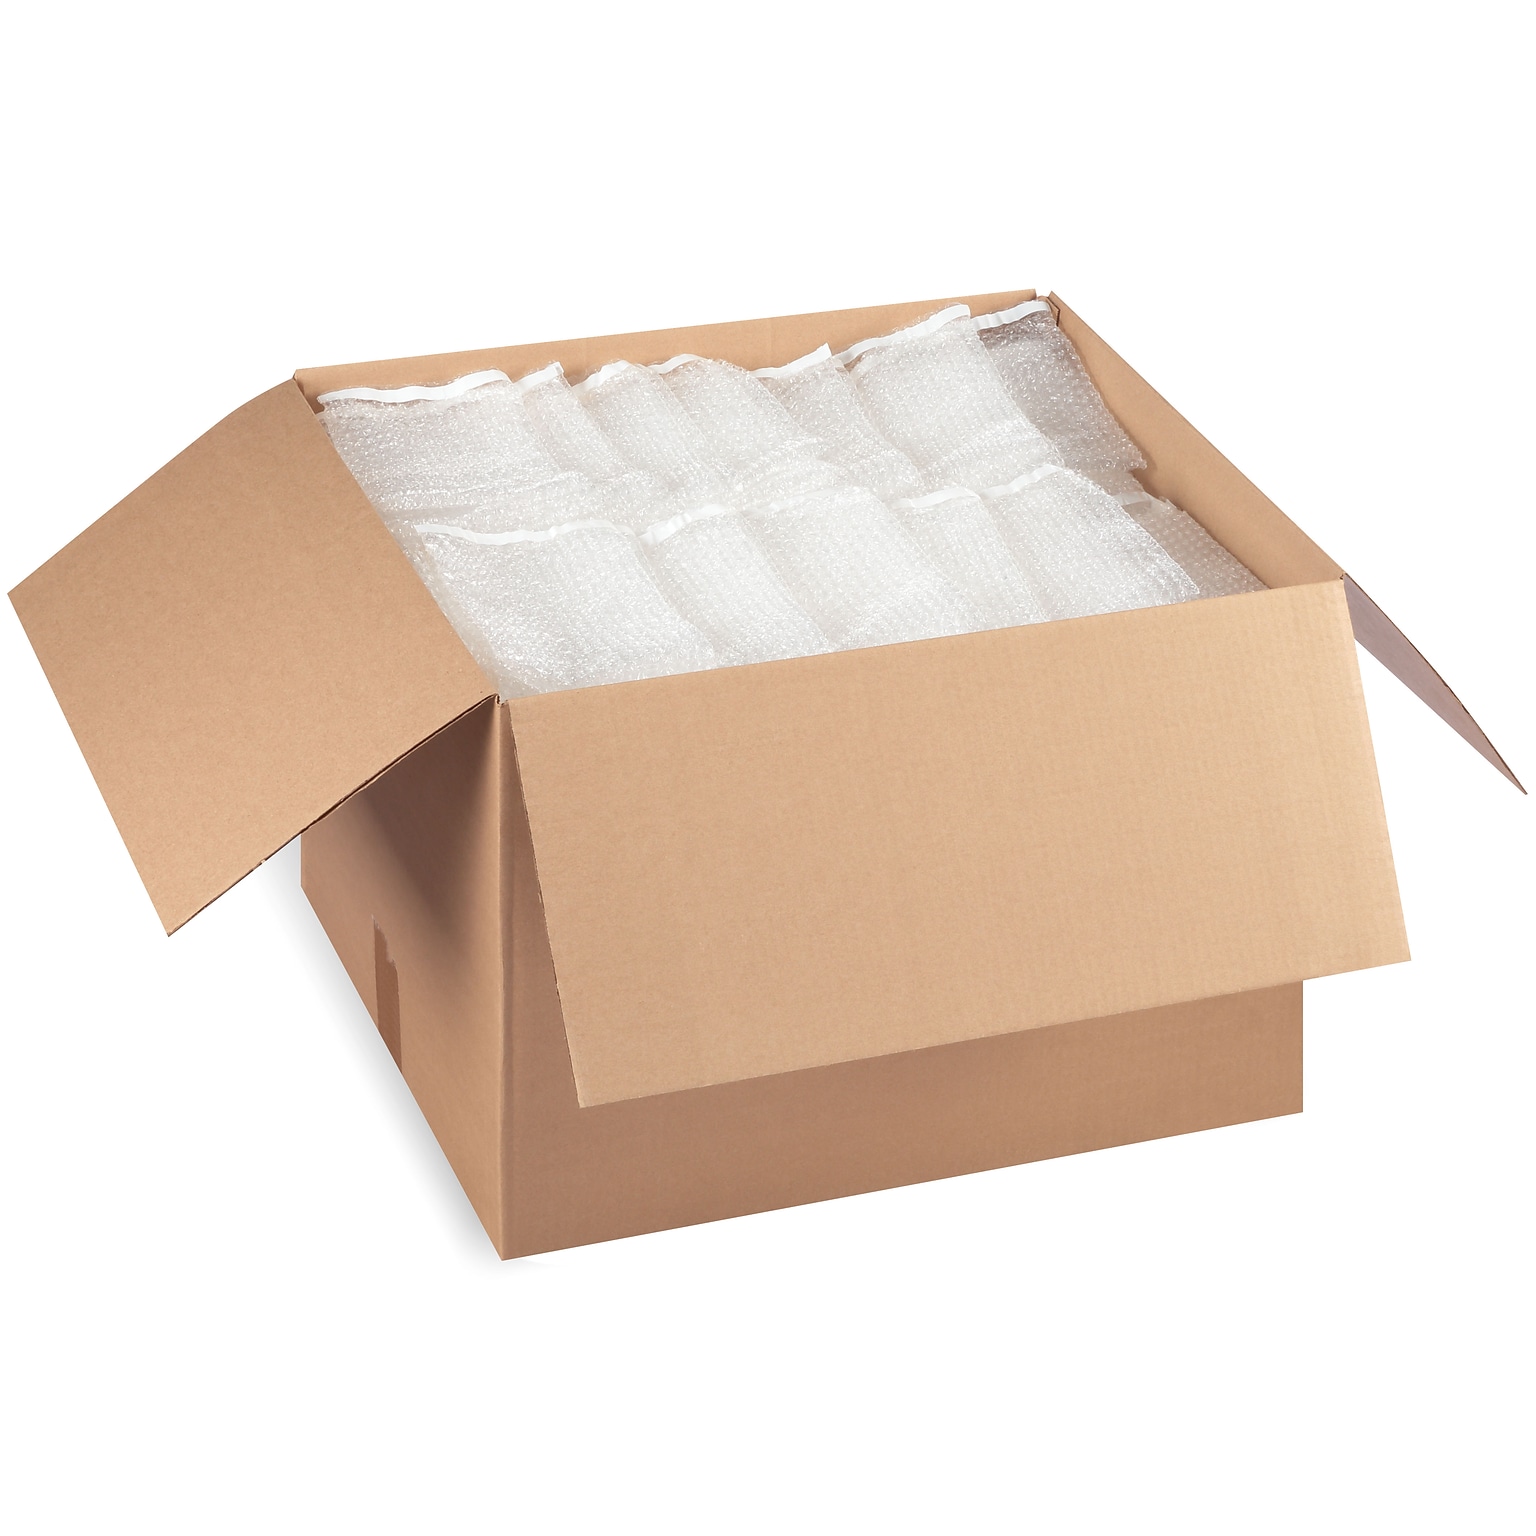 Coastwide Professional™ 6 x 8.5 Self-Seal 3/16 Bubble Bags, 250/Carton (CW53992)